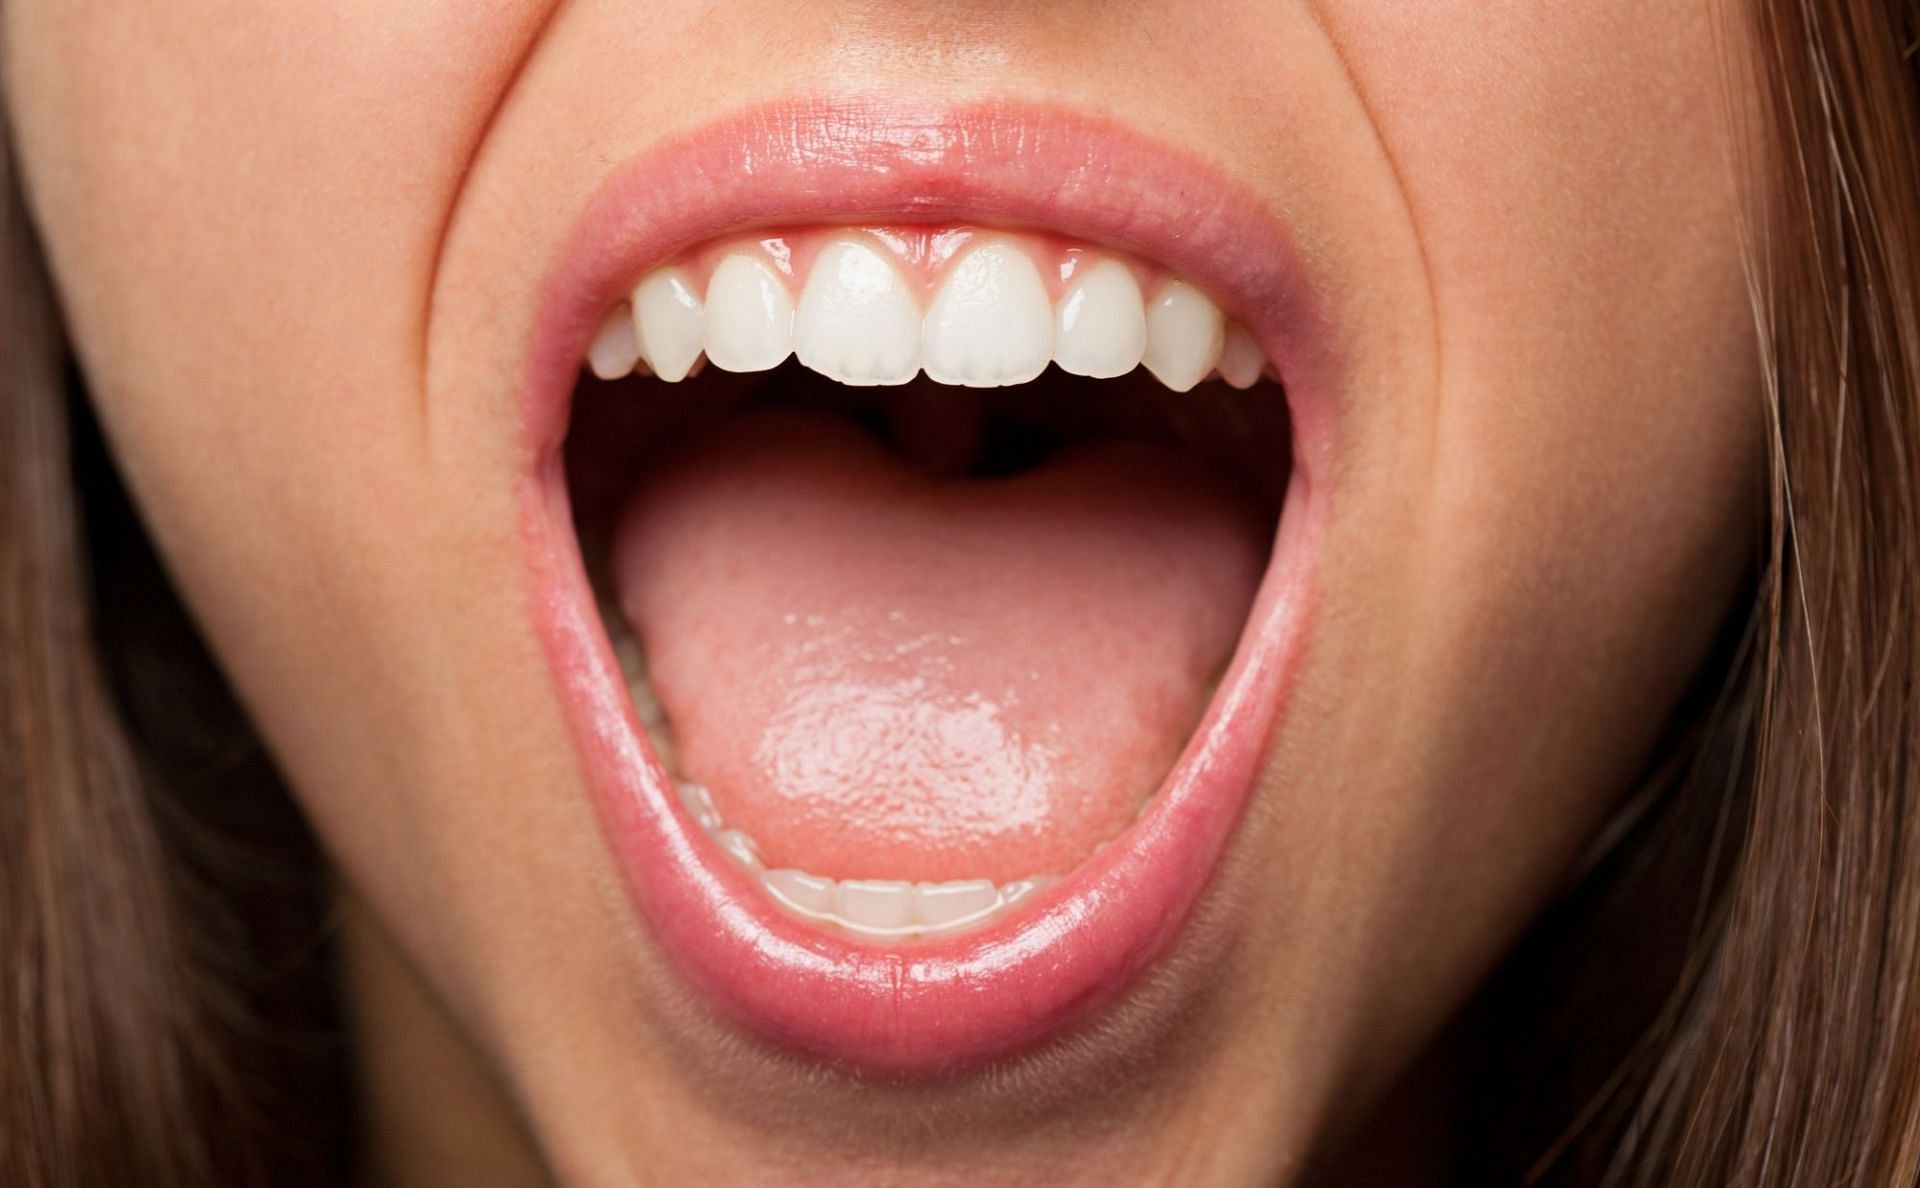 A burnt tongue is a common problem. (Image via Freepik/asierromero)